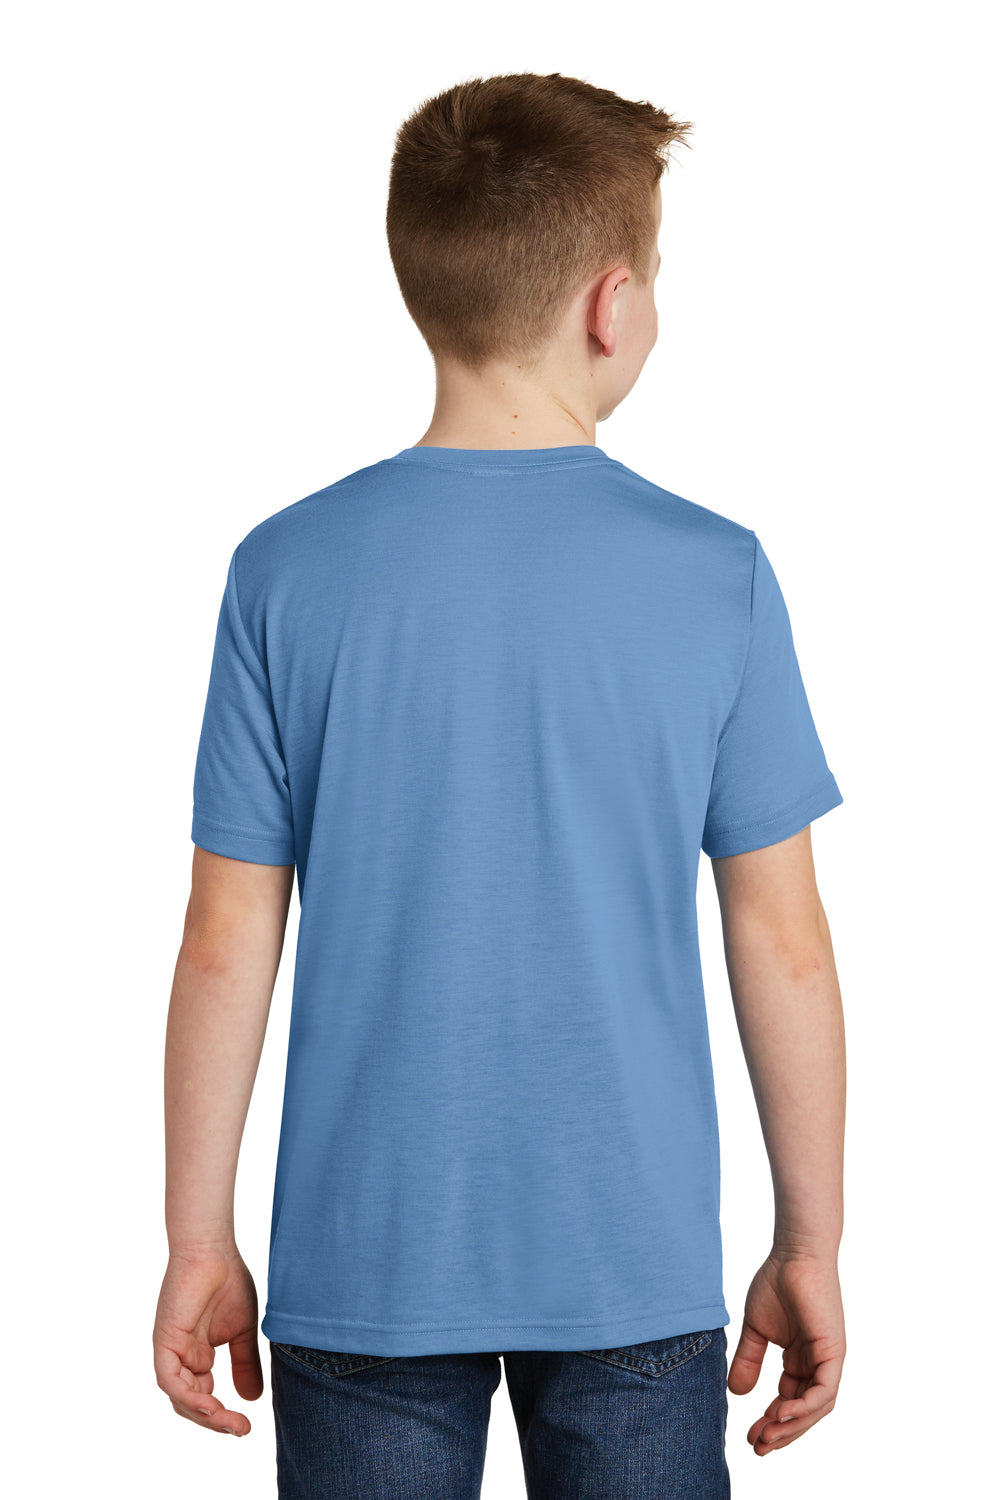 Sport-Tek YST450 Youth Competitor Moisture Wicking Short Sleeve Crewneck T-Shirt Carolina Blue Back